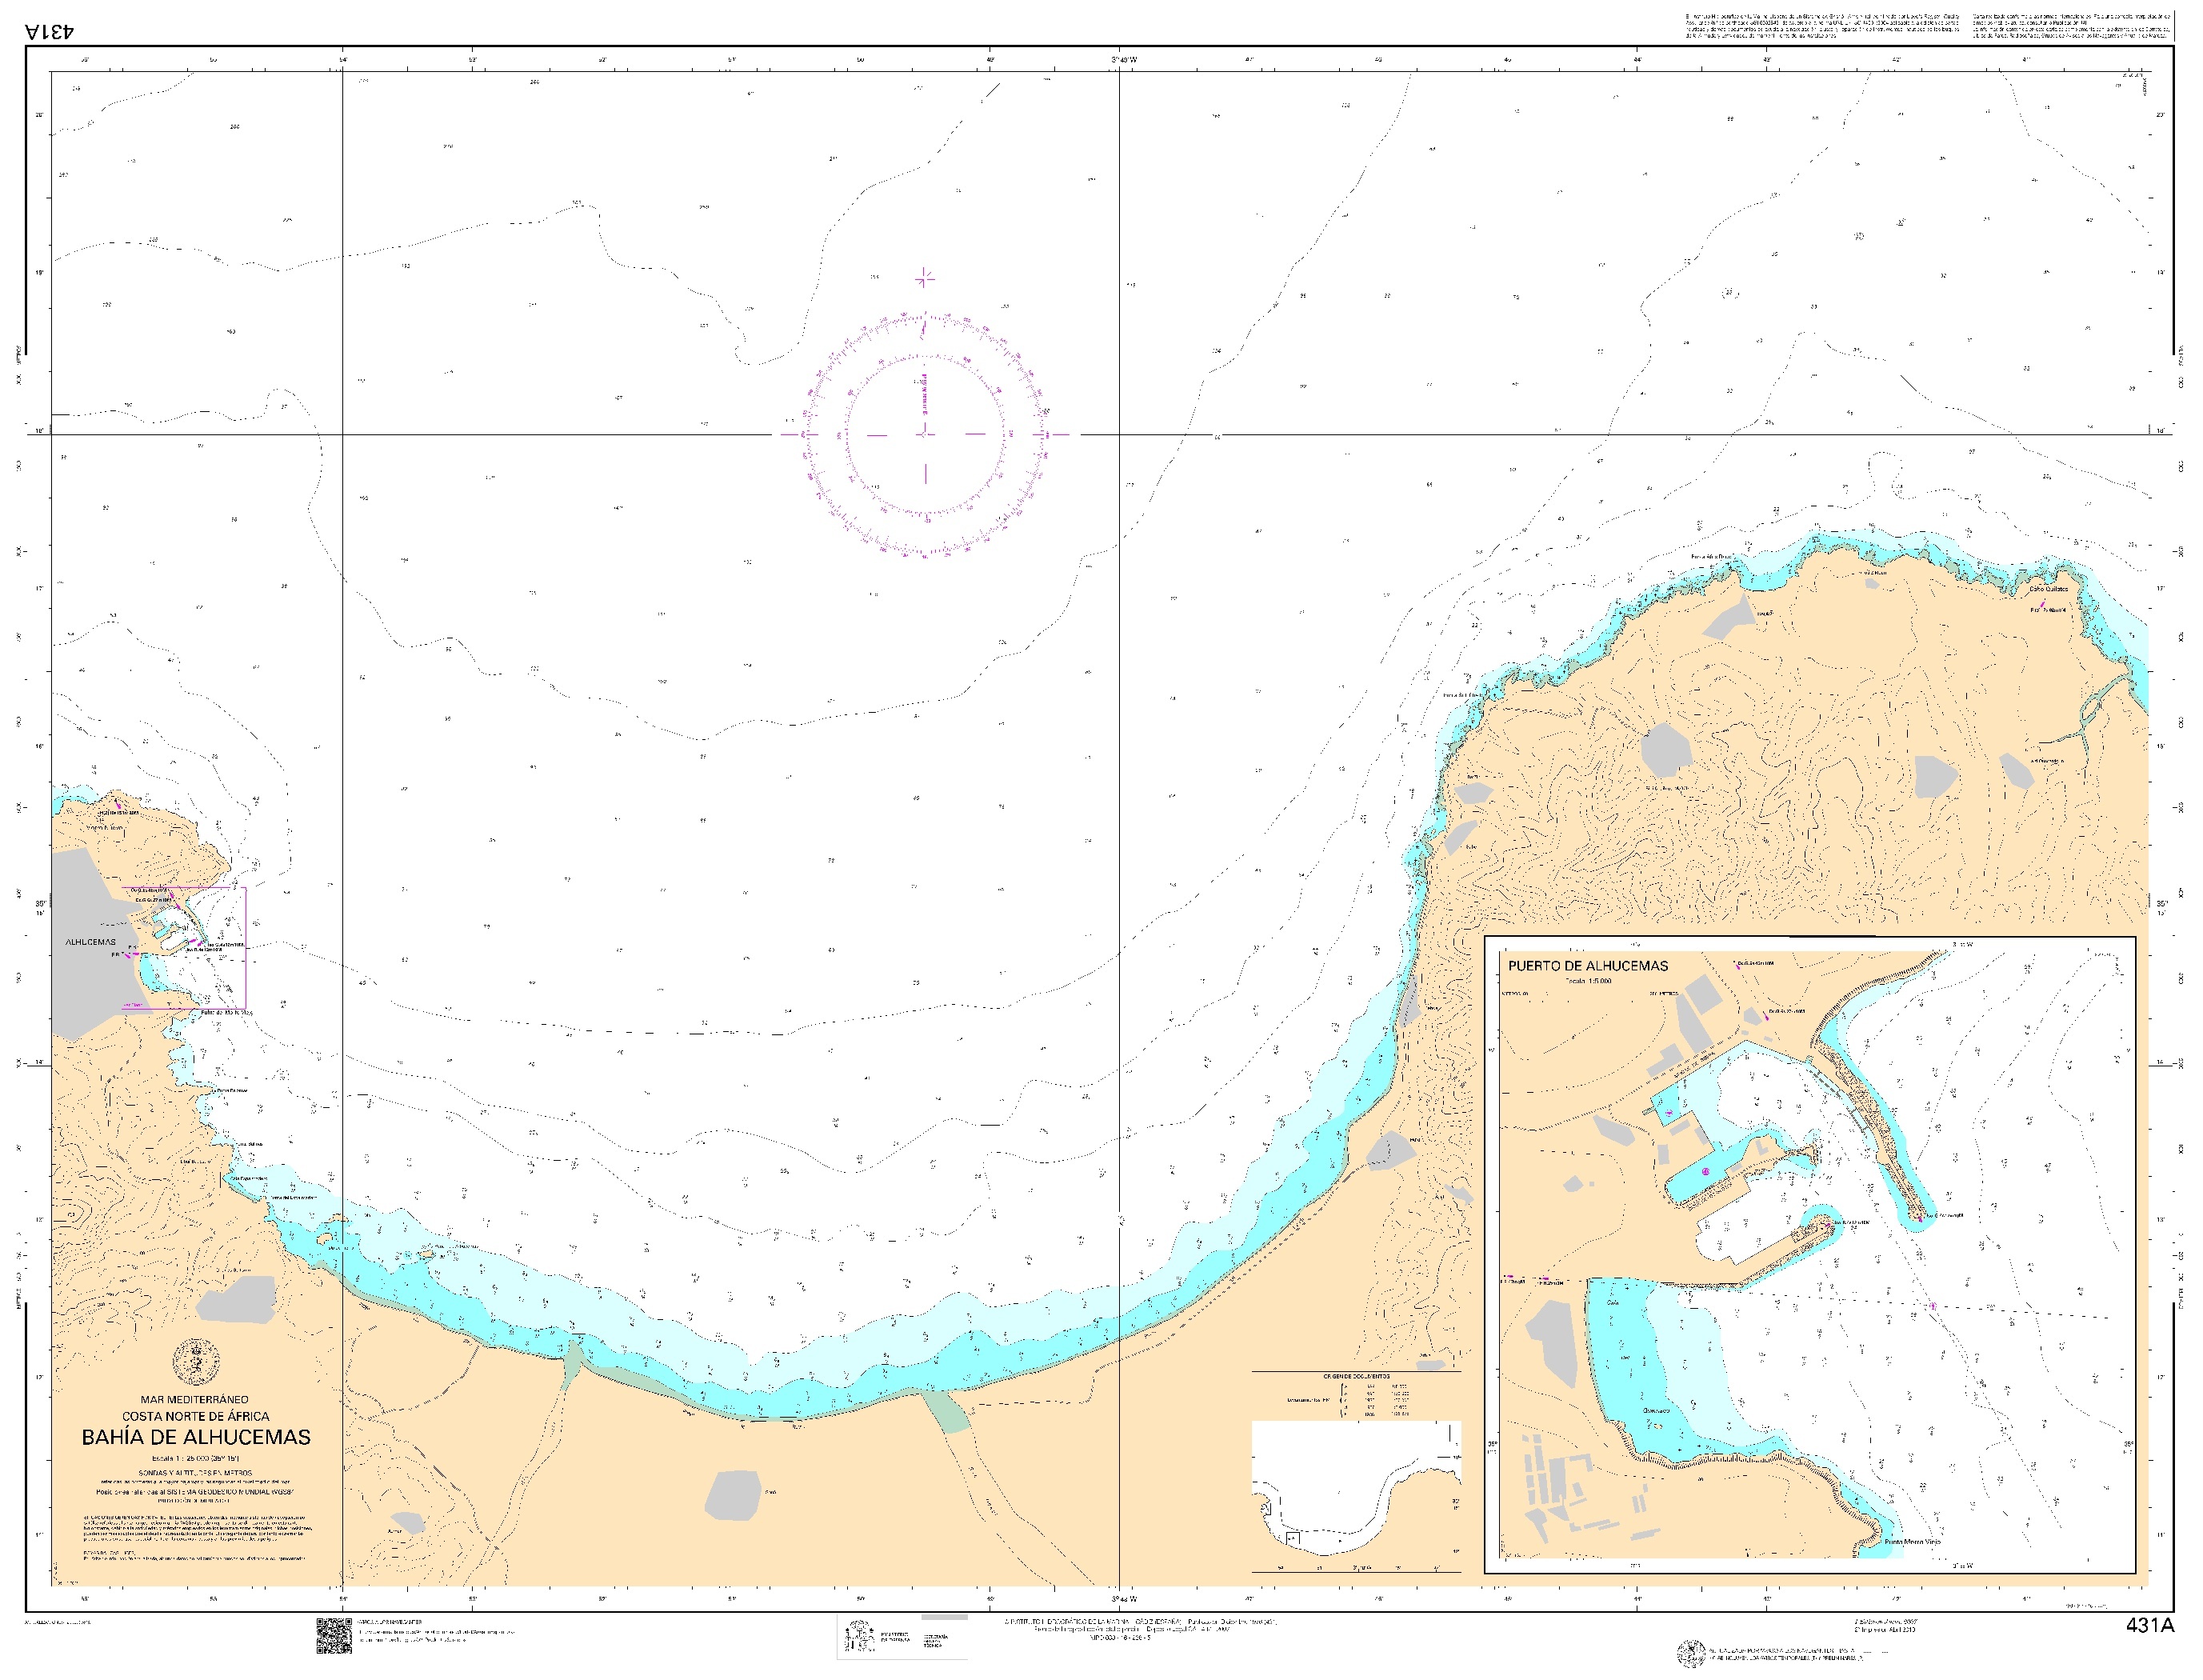 431A Bahía de Alhucemas (plano inserto: puerto de Alhucemas) "POD. 1:25000. 1:25000"